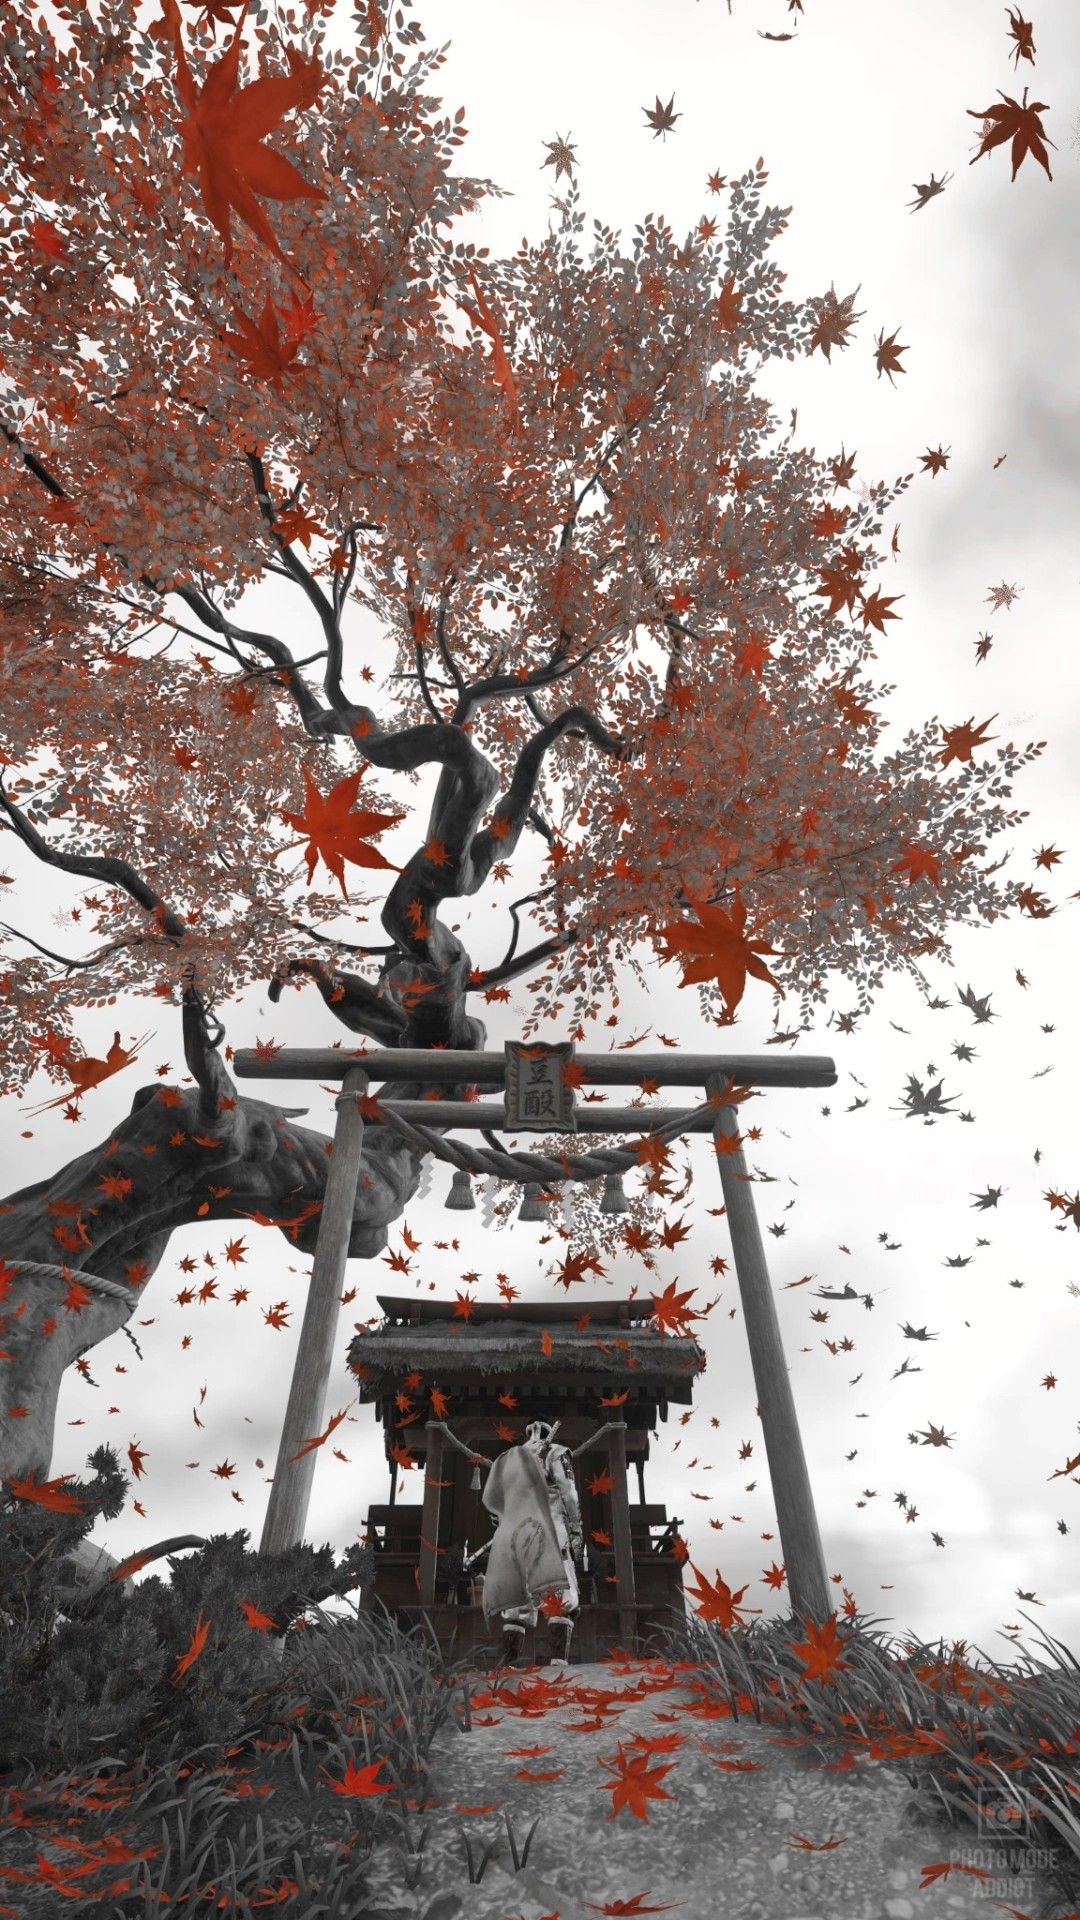 Jin Sakai tribute - Ghost of Tsushima Dedicated to my love for interactive storytelling